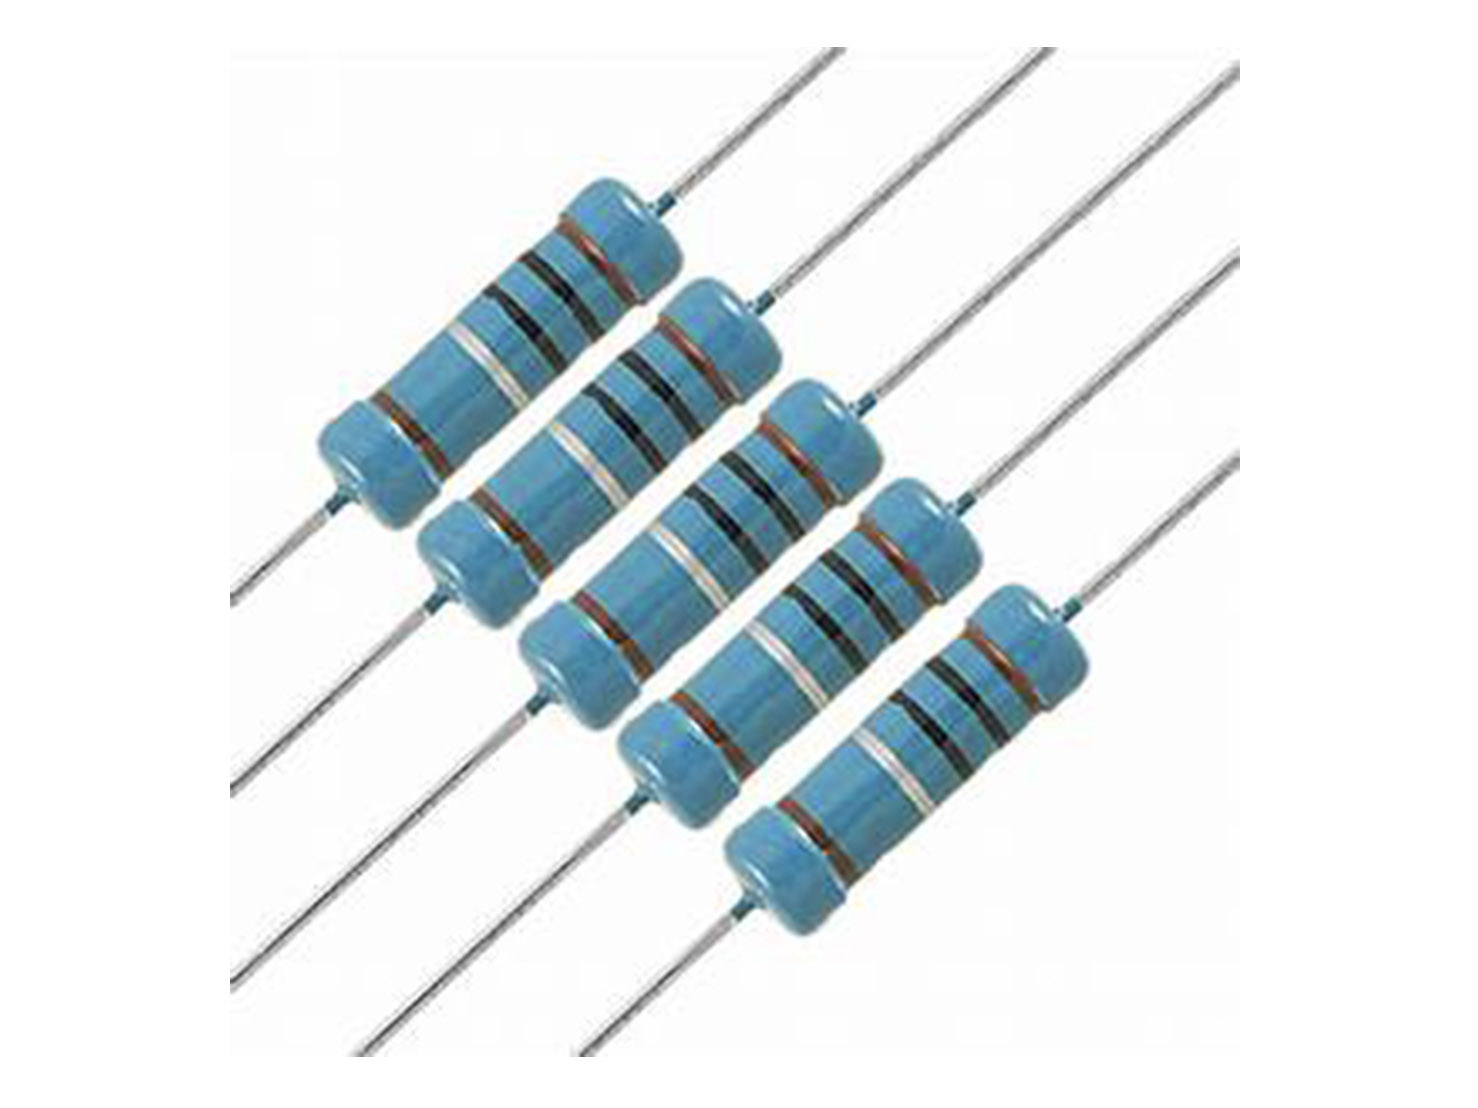 MR - Metal Film - Standard Resistors